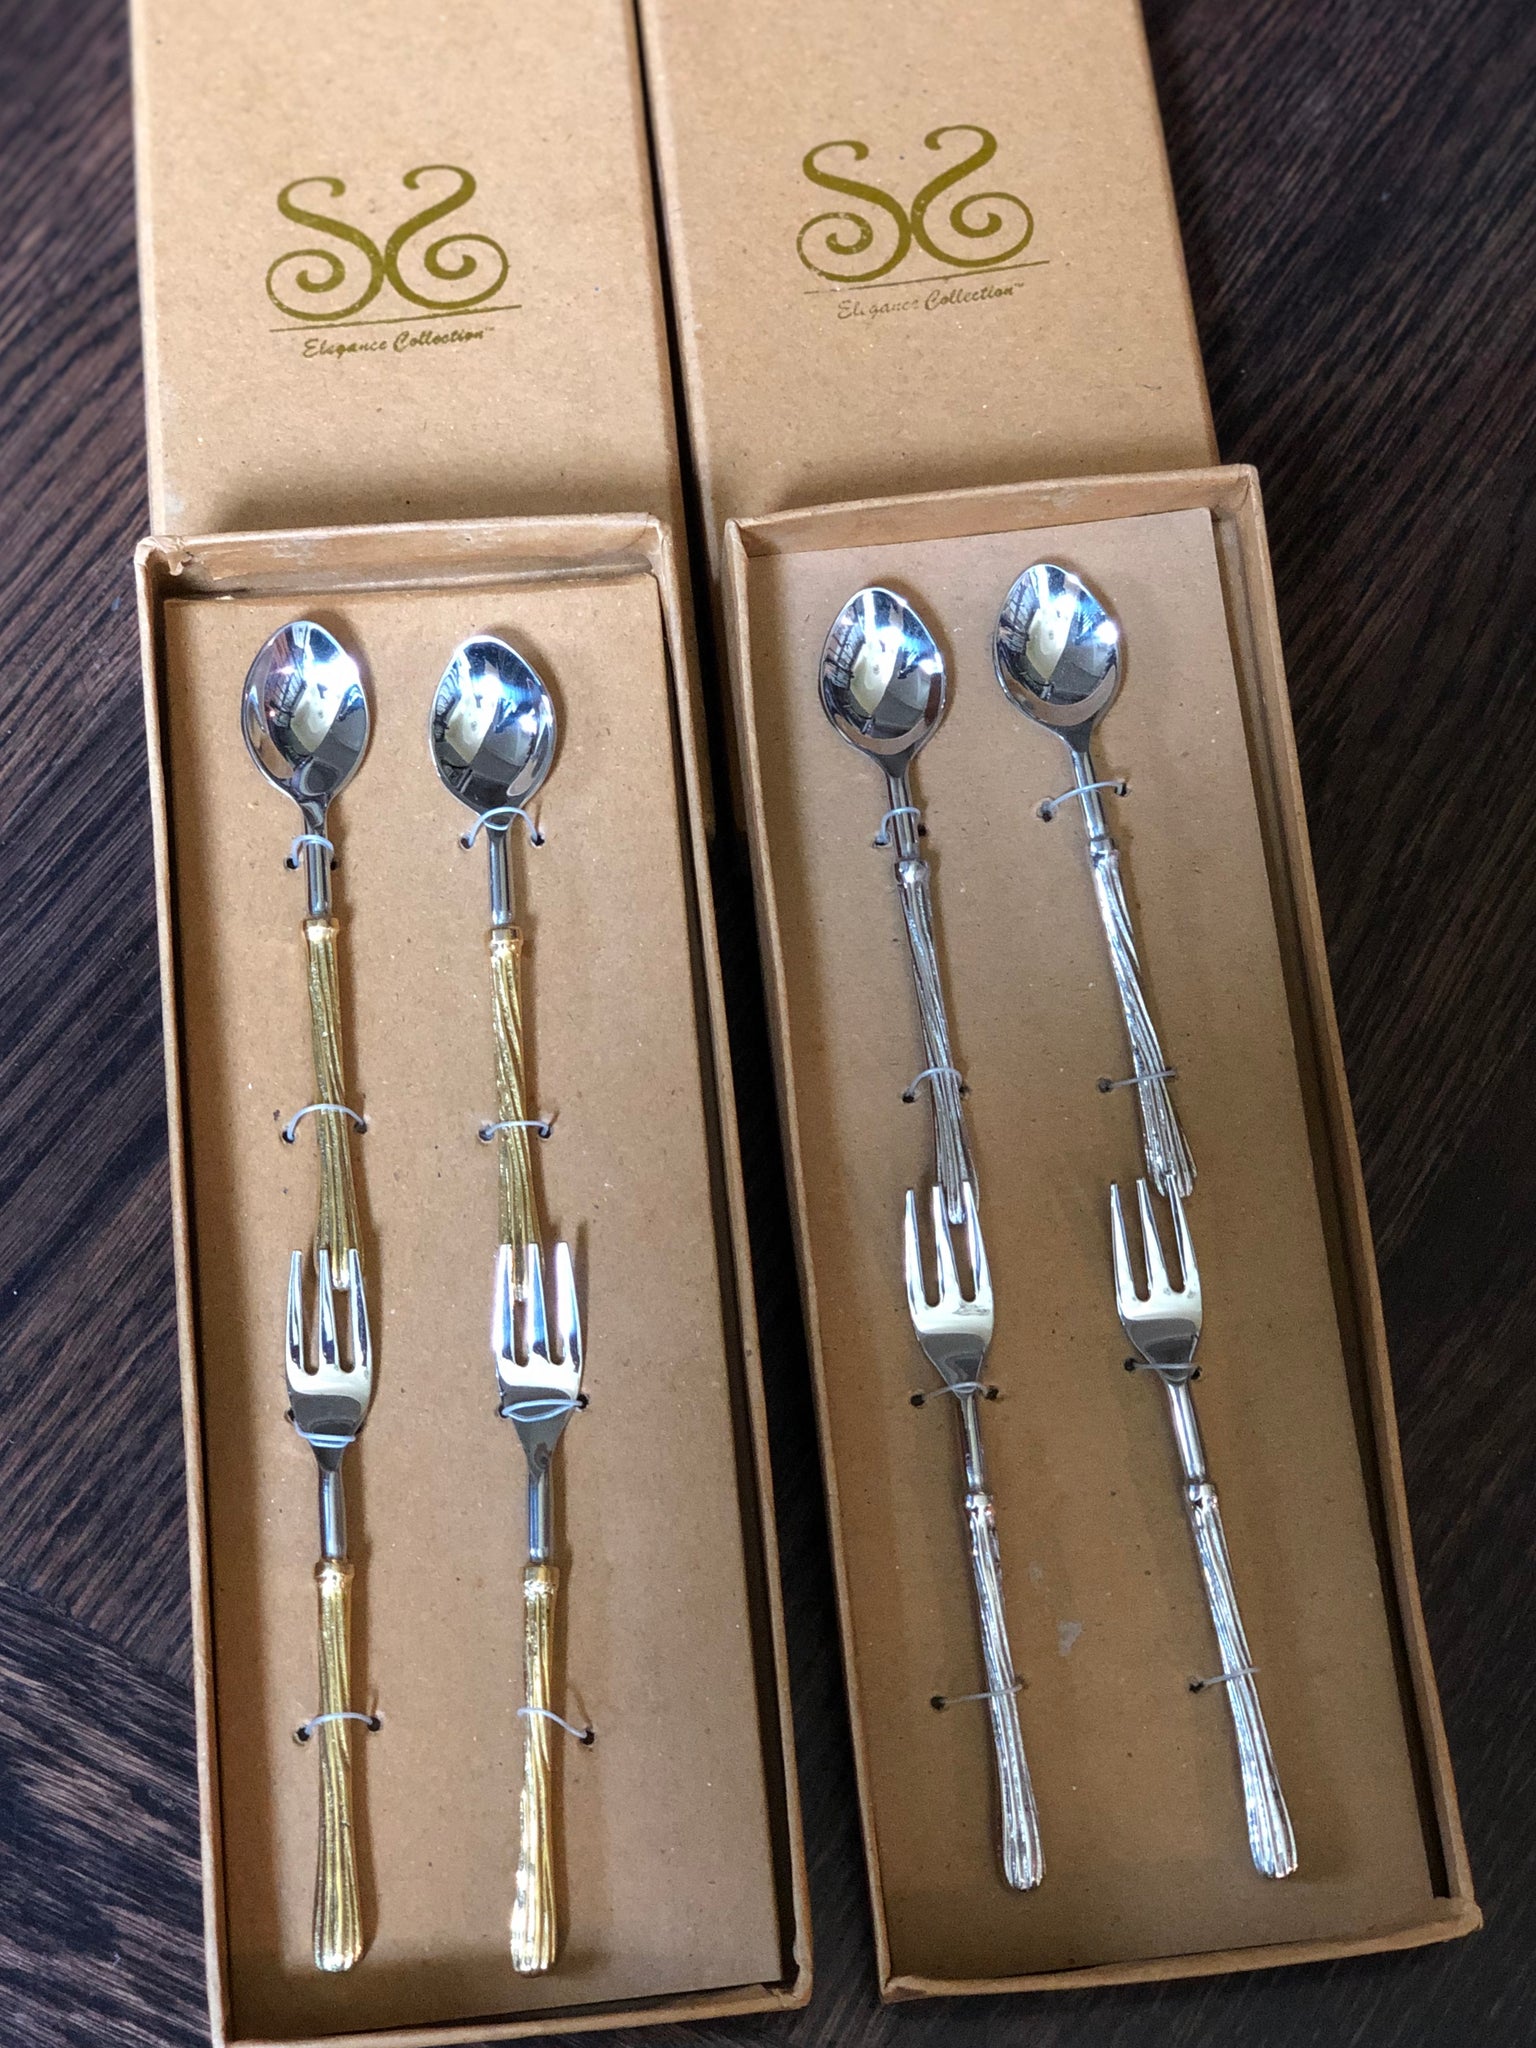 Spoon And fork Dip Set